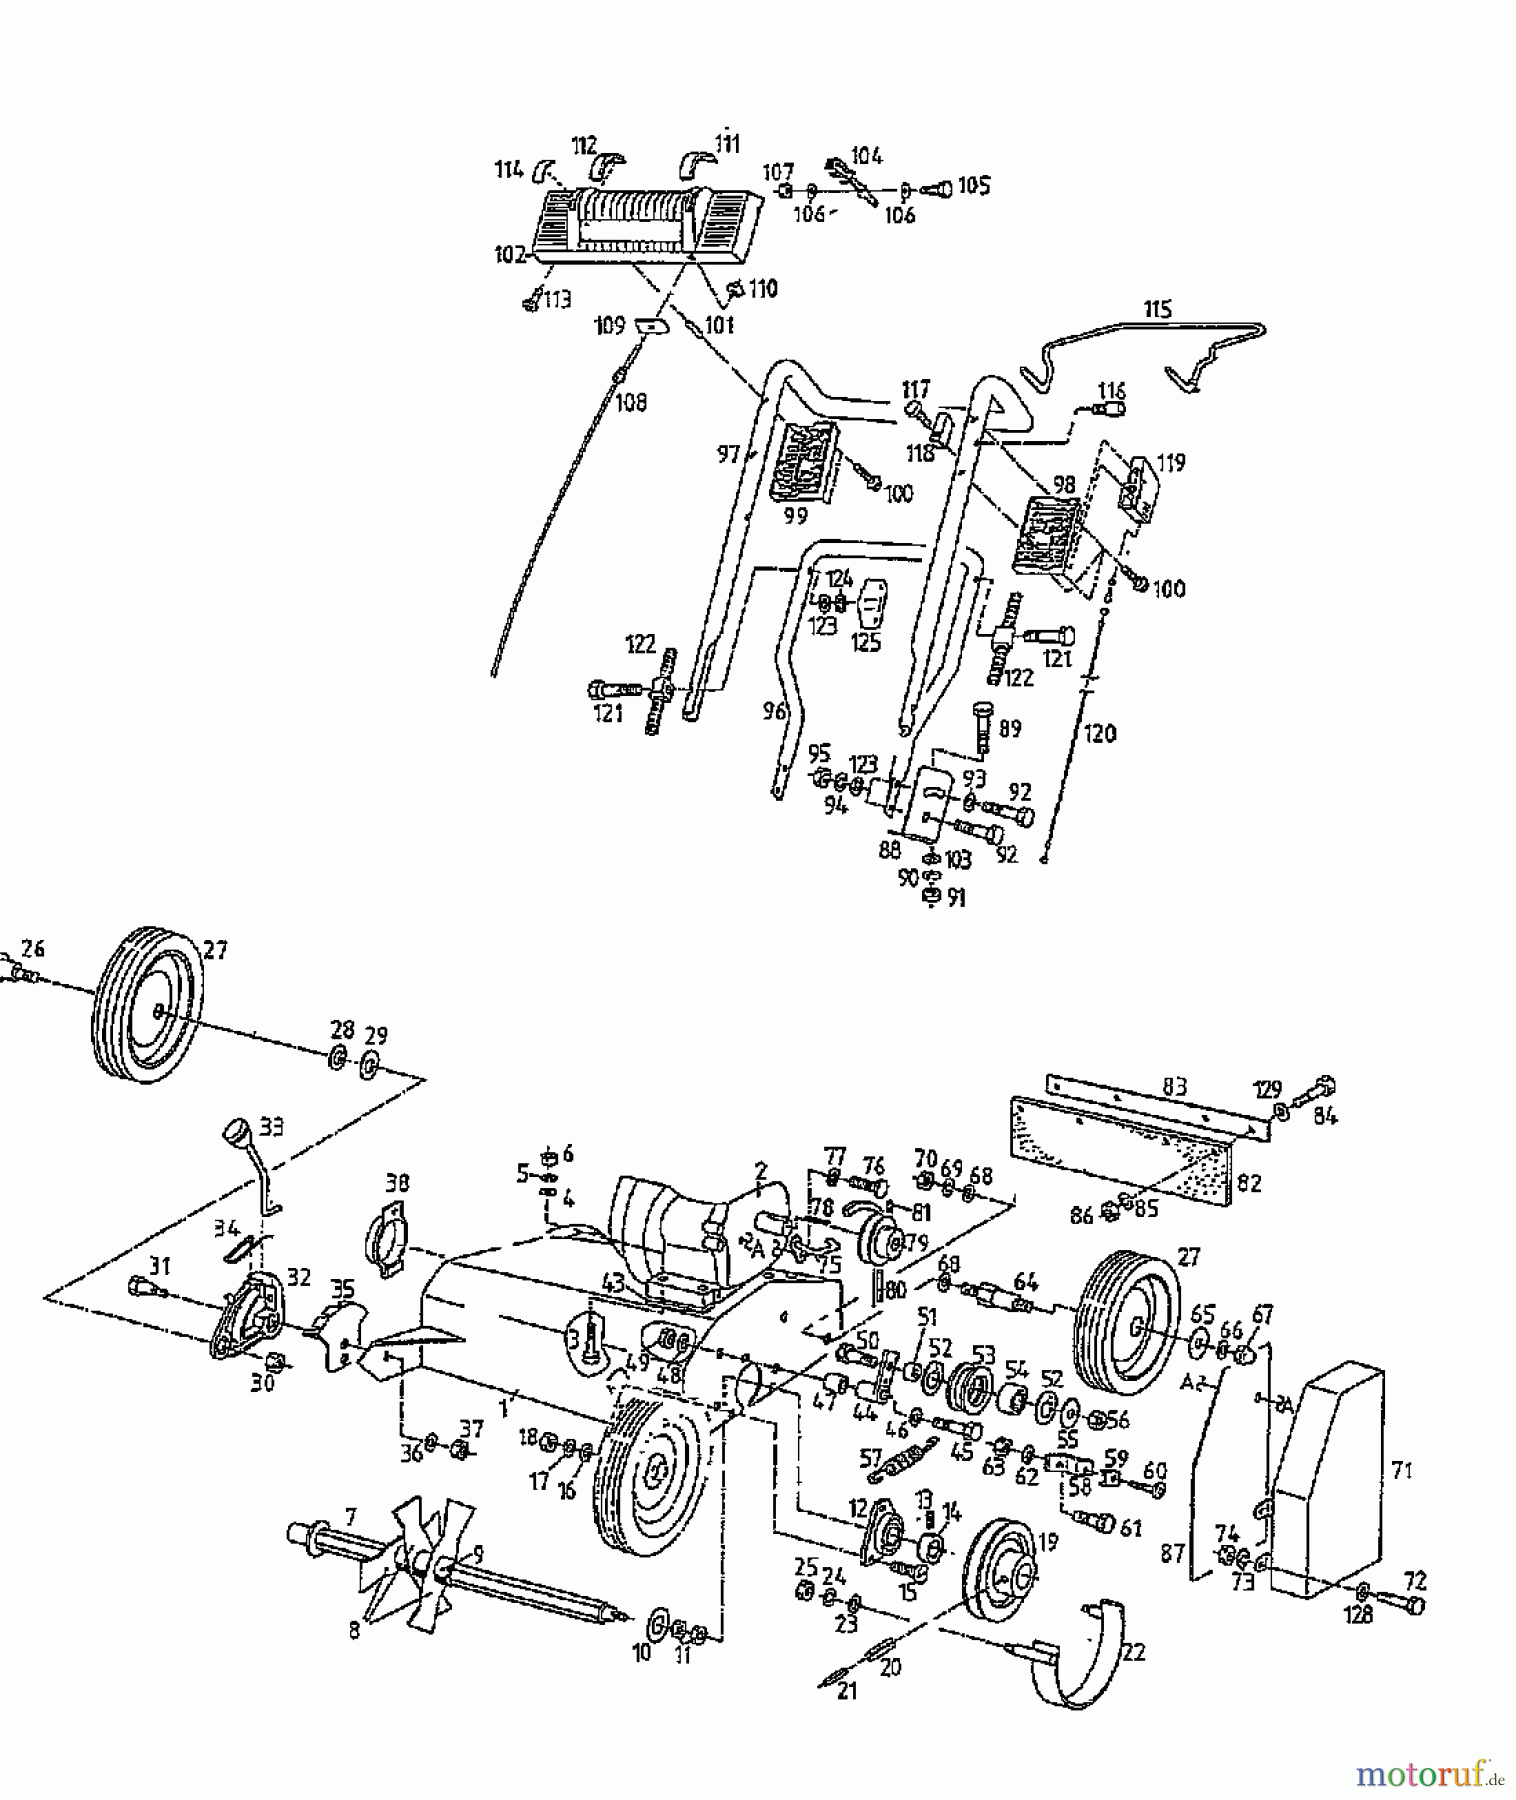  Gutbrod Petrol verticutter MV 504 00053.05  (1997) Basic machine